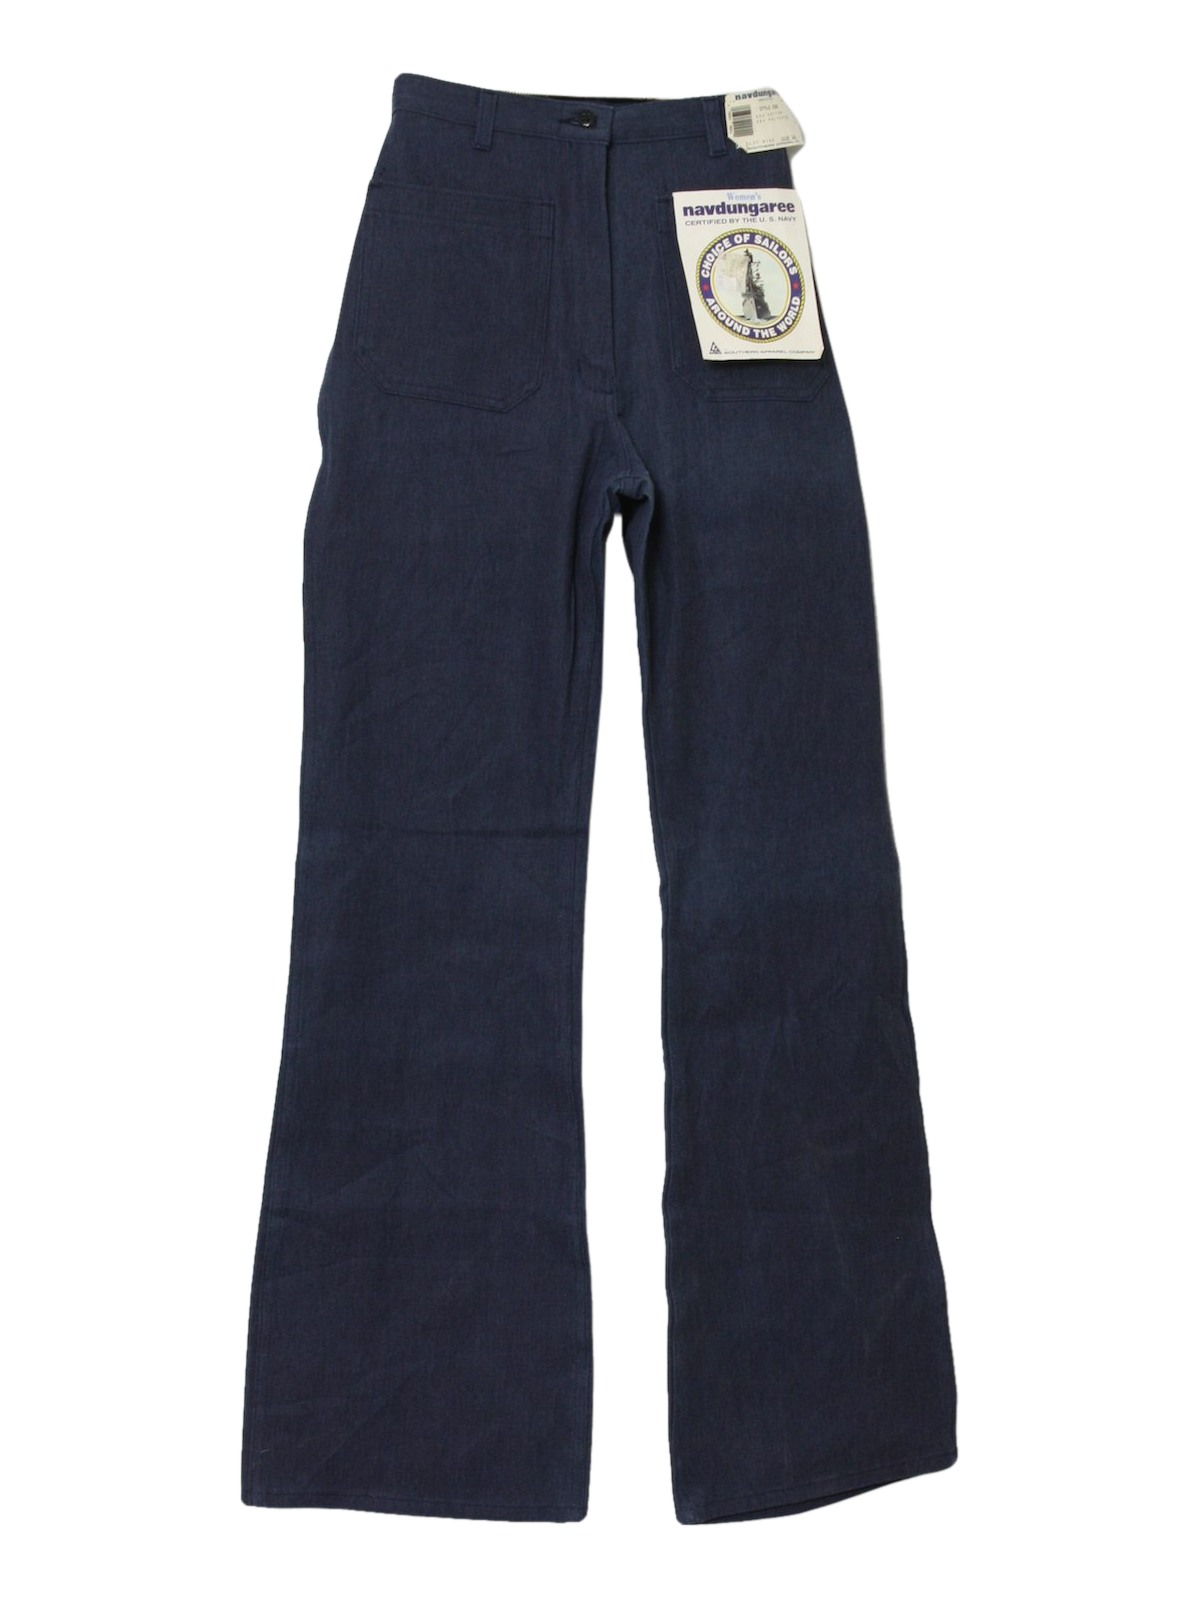 1980's Vintage Navdungaree Bellbottom Pants: 80s -Navdungaree- Womens ...